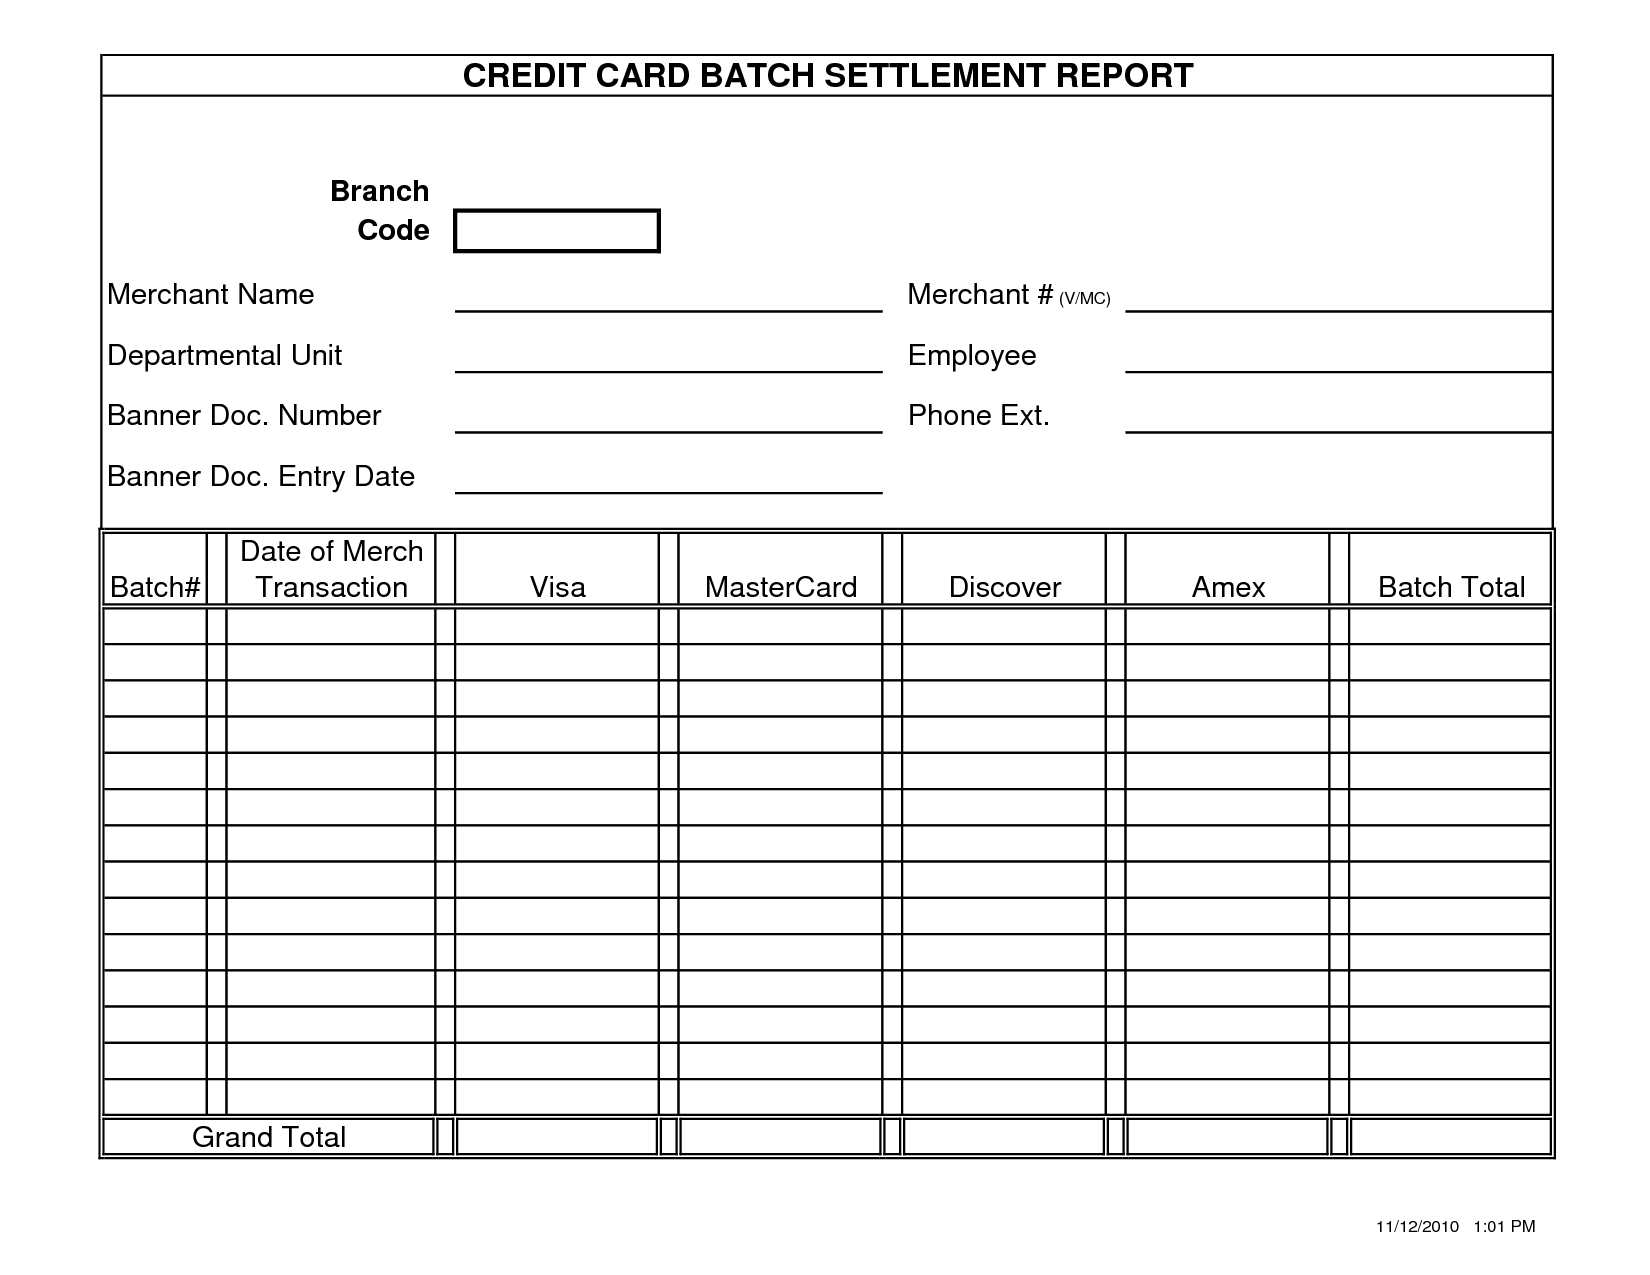 Printable Blank Report Cards | School Report Card, Report Inside School Report Template Free